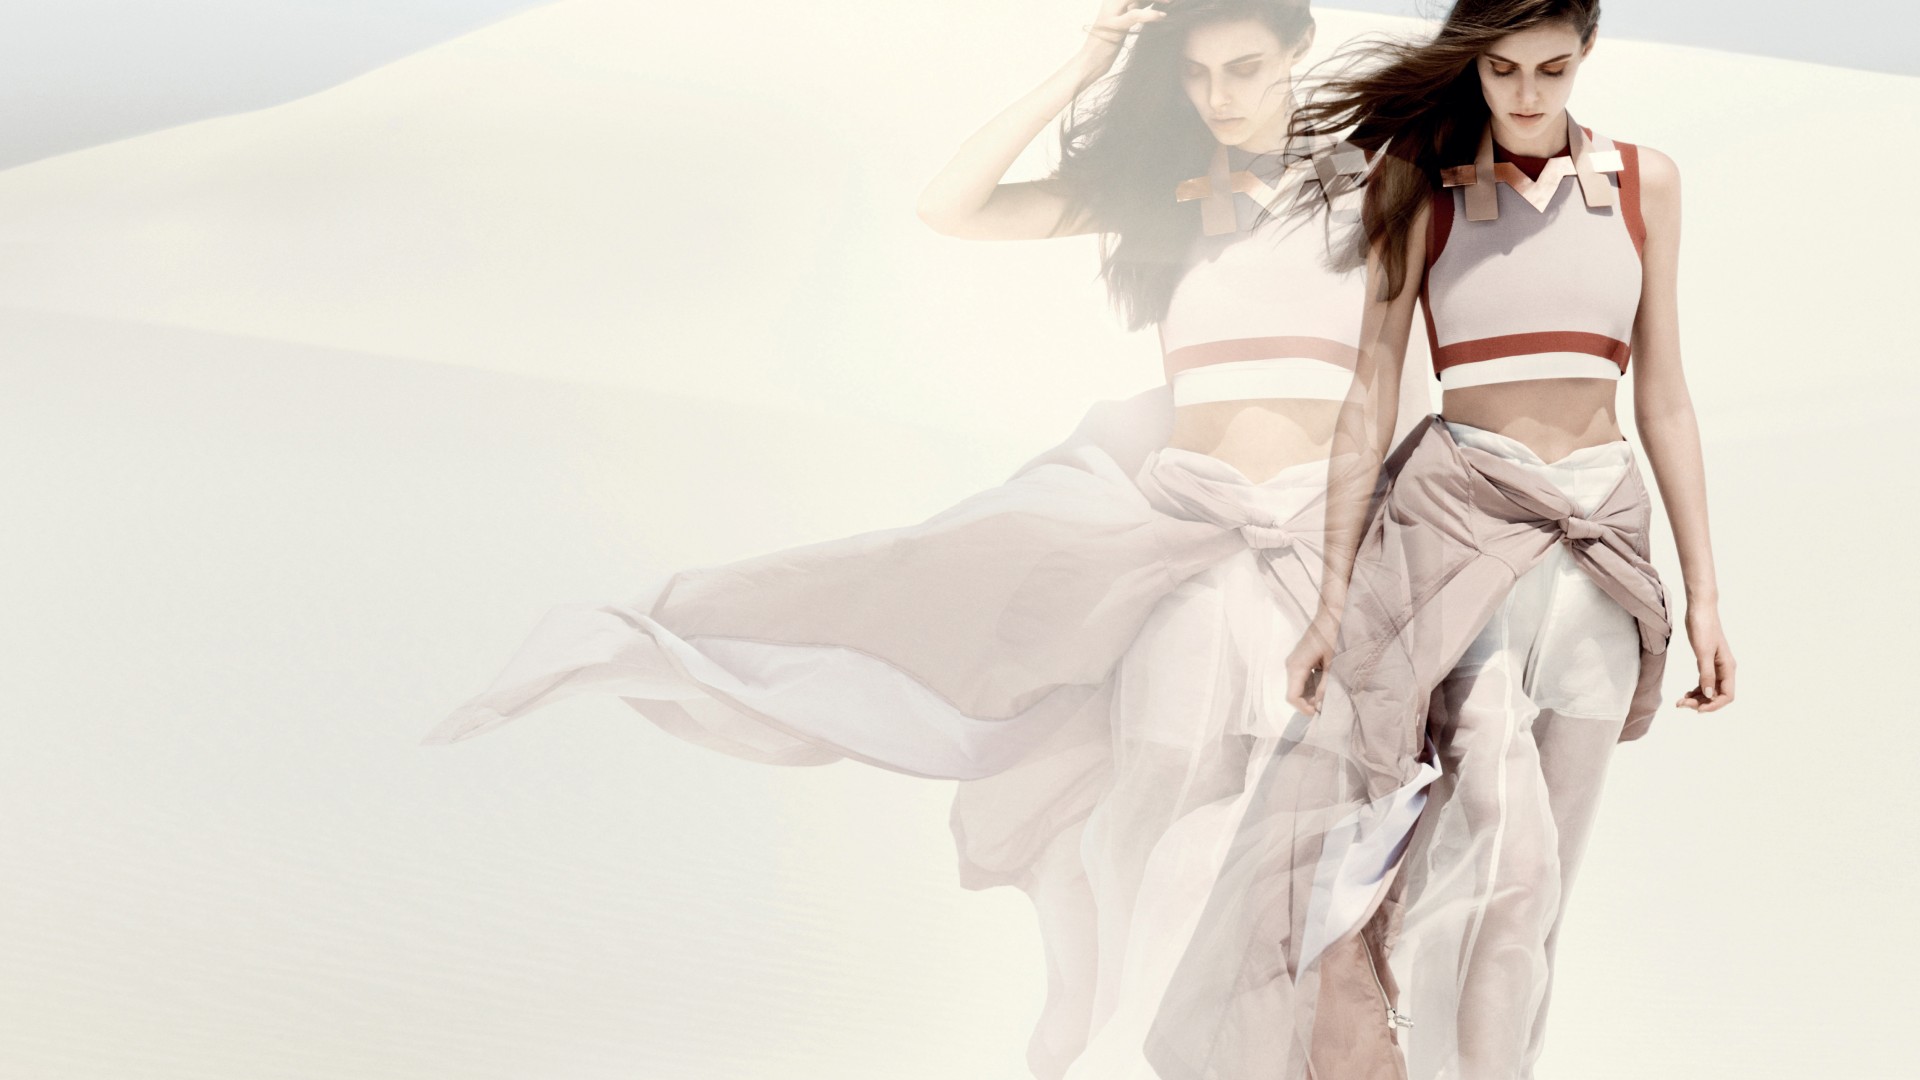 Аугусте Абелюнайте, Топ модель 2015, модель, белое платье, песок, ветер, Auguste Abeliunaite, Top Fashion Models 2015, model, white dress, sand, wind (horizontal)